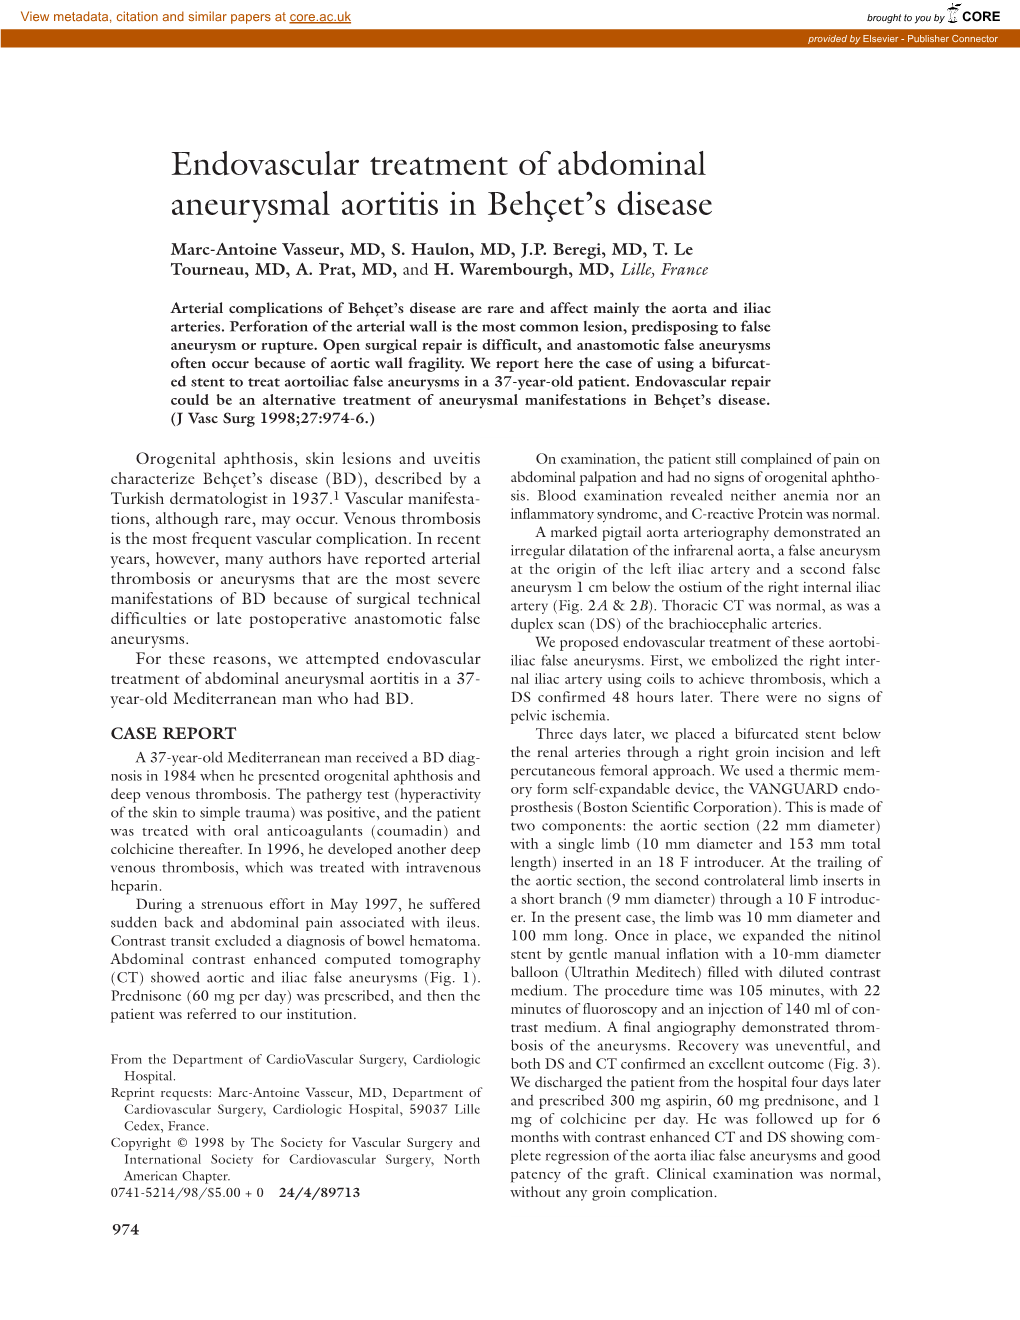 Endovascular Treatment of Abdominal Aneurysmal Aortitis in Behçet's